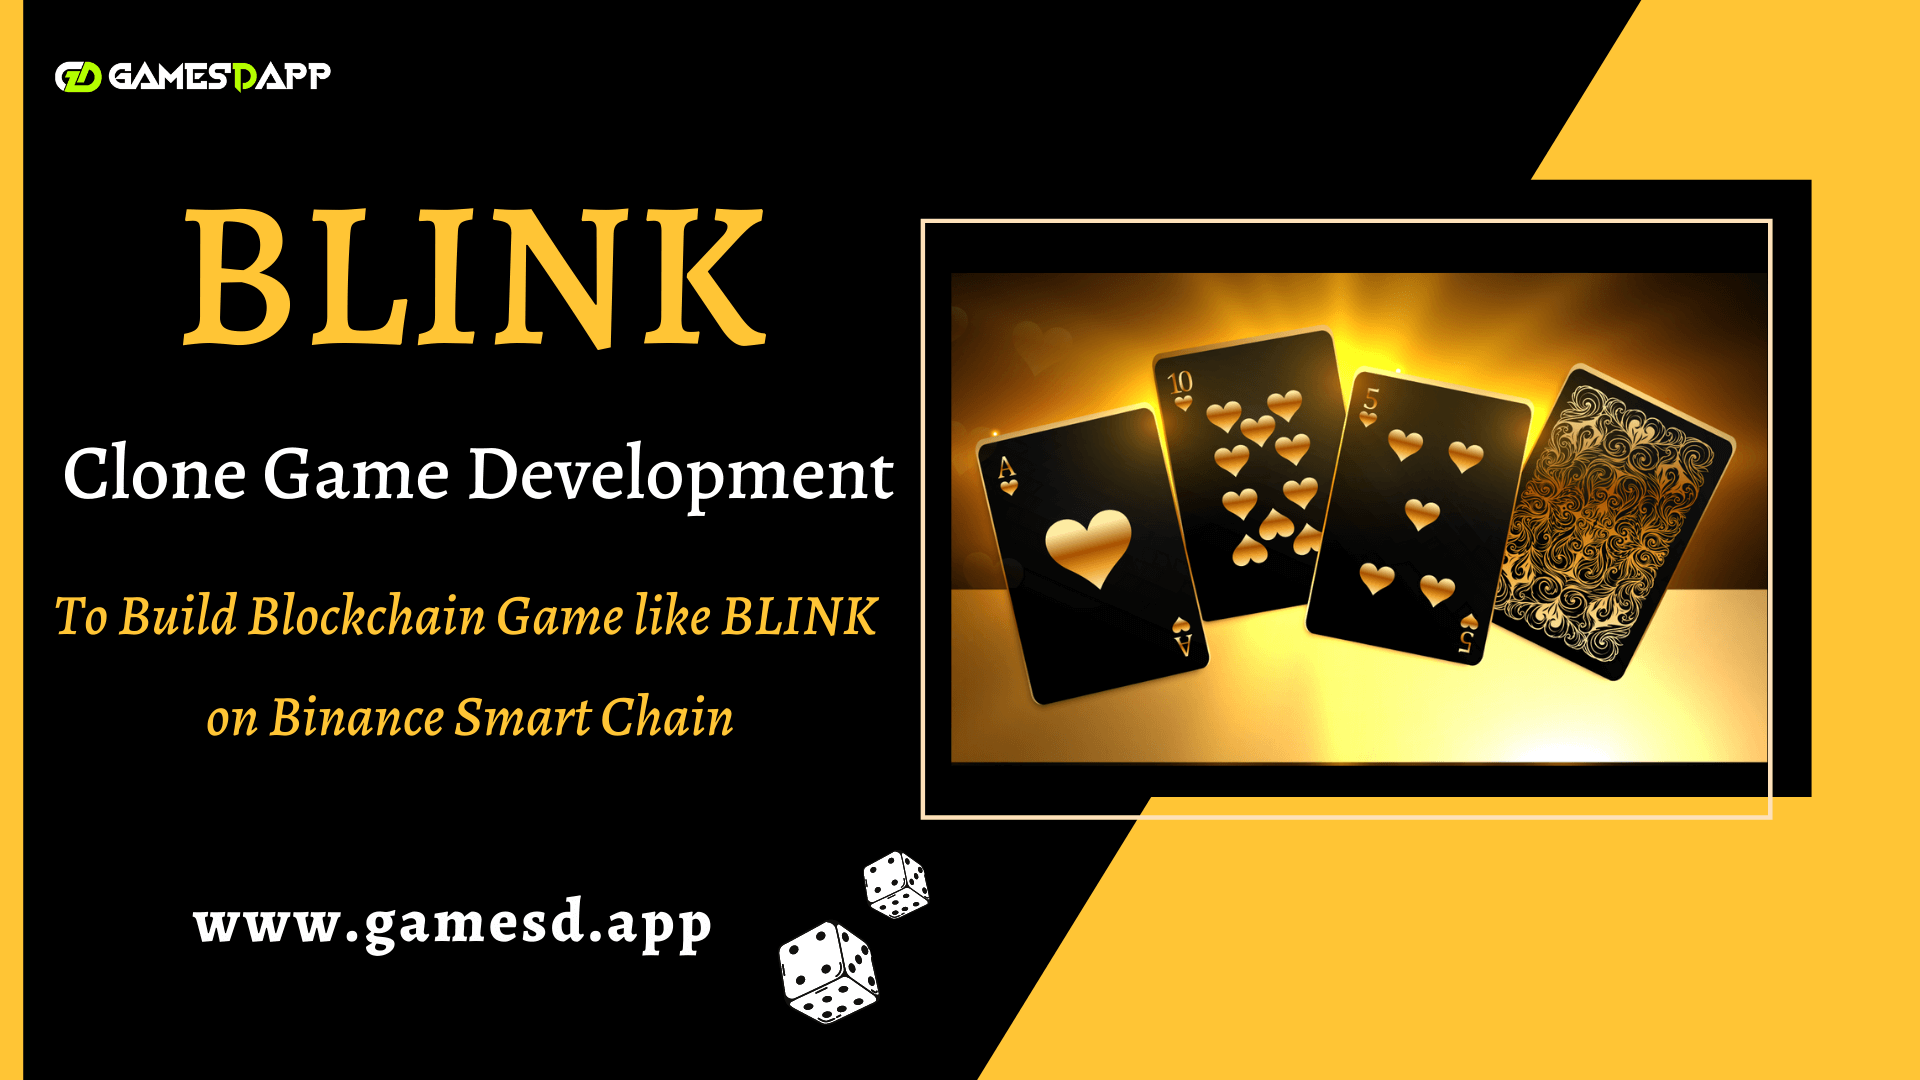 Blink Game Clone Development - To Build Blockchain Game Like Blink on Binance Smart Chain